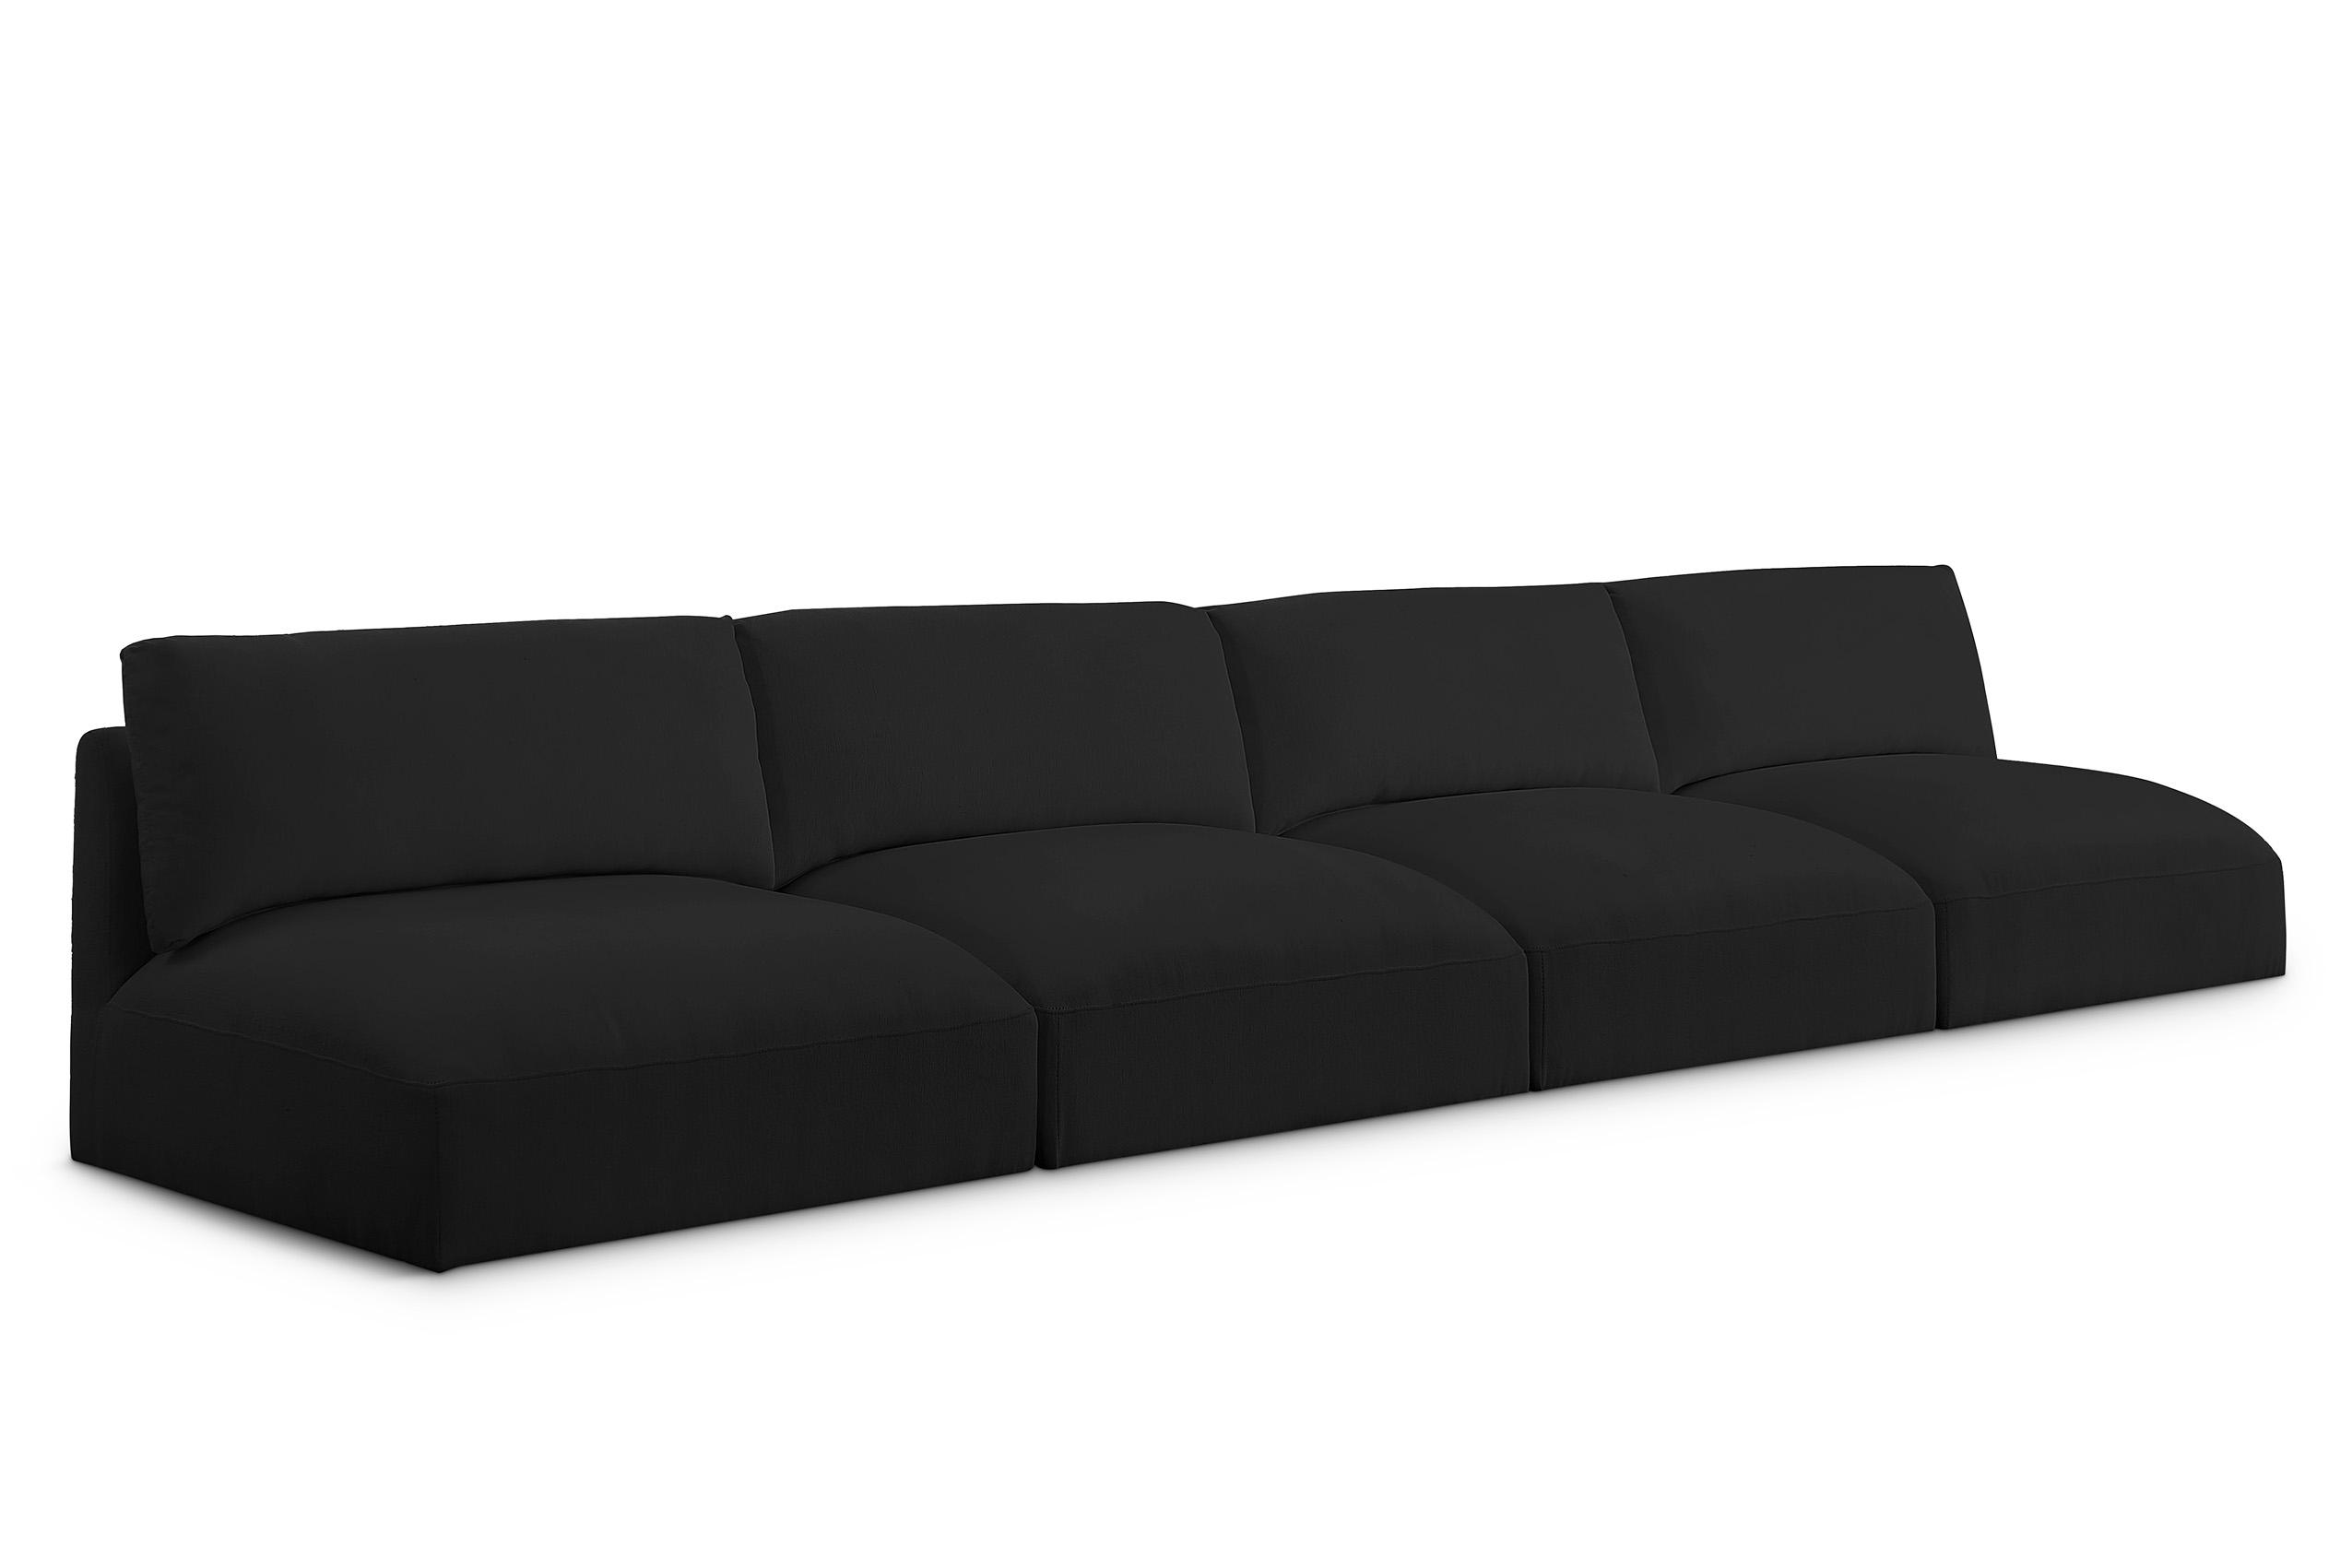 Contemporary, Modern Modular Sofa EASE 696Black-S152A 696Black-S152A in Black Fabric